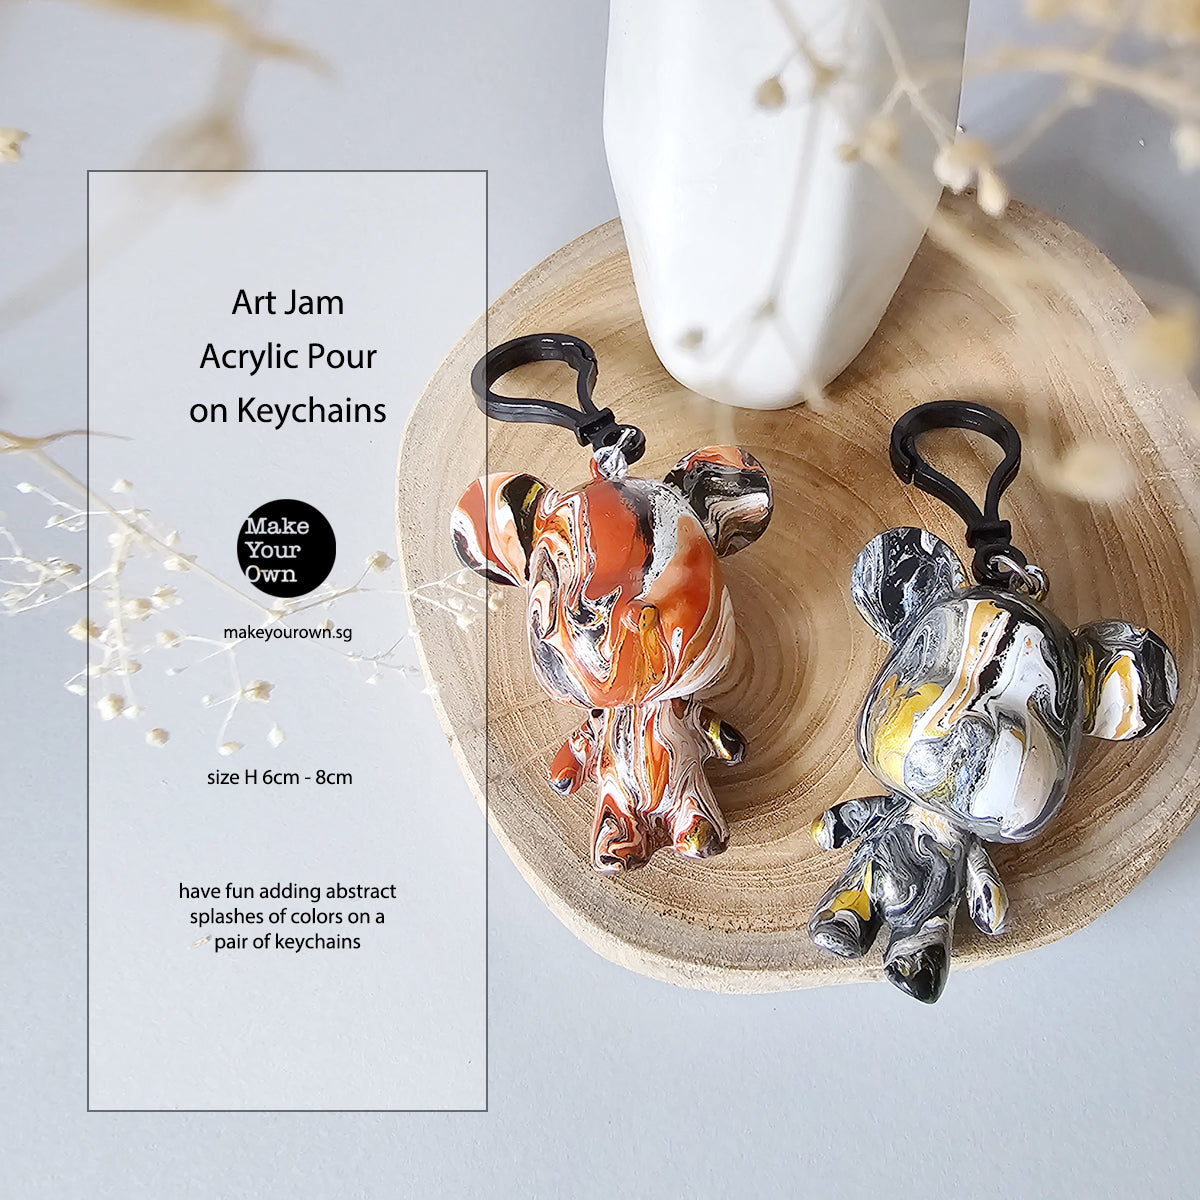 Corporate Art Jam - Acrylic Pour on Keychains